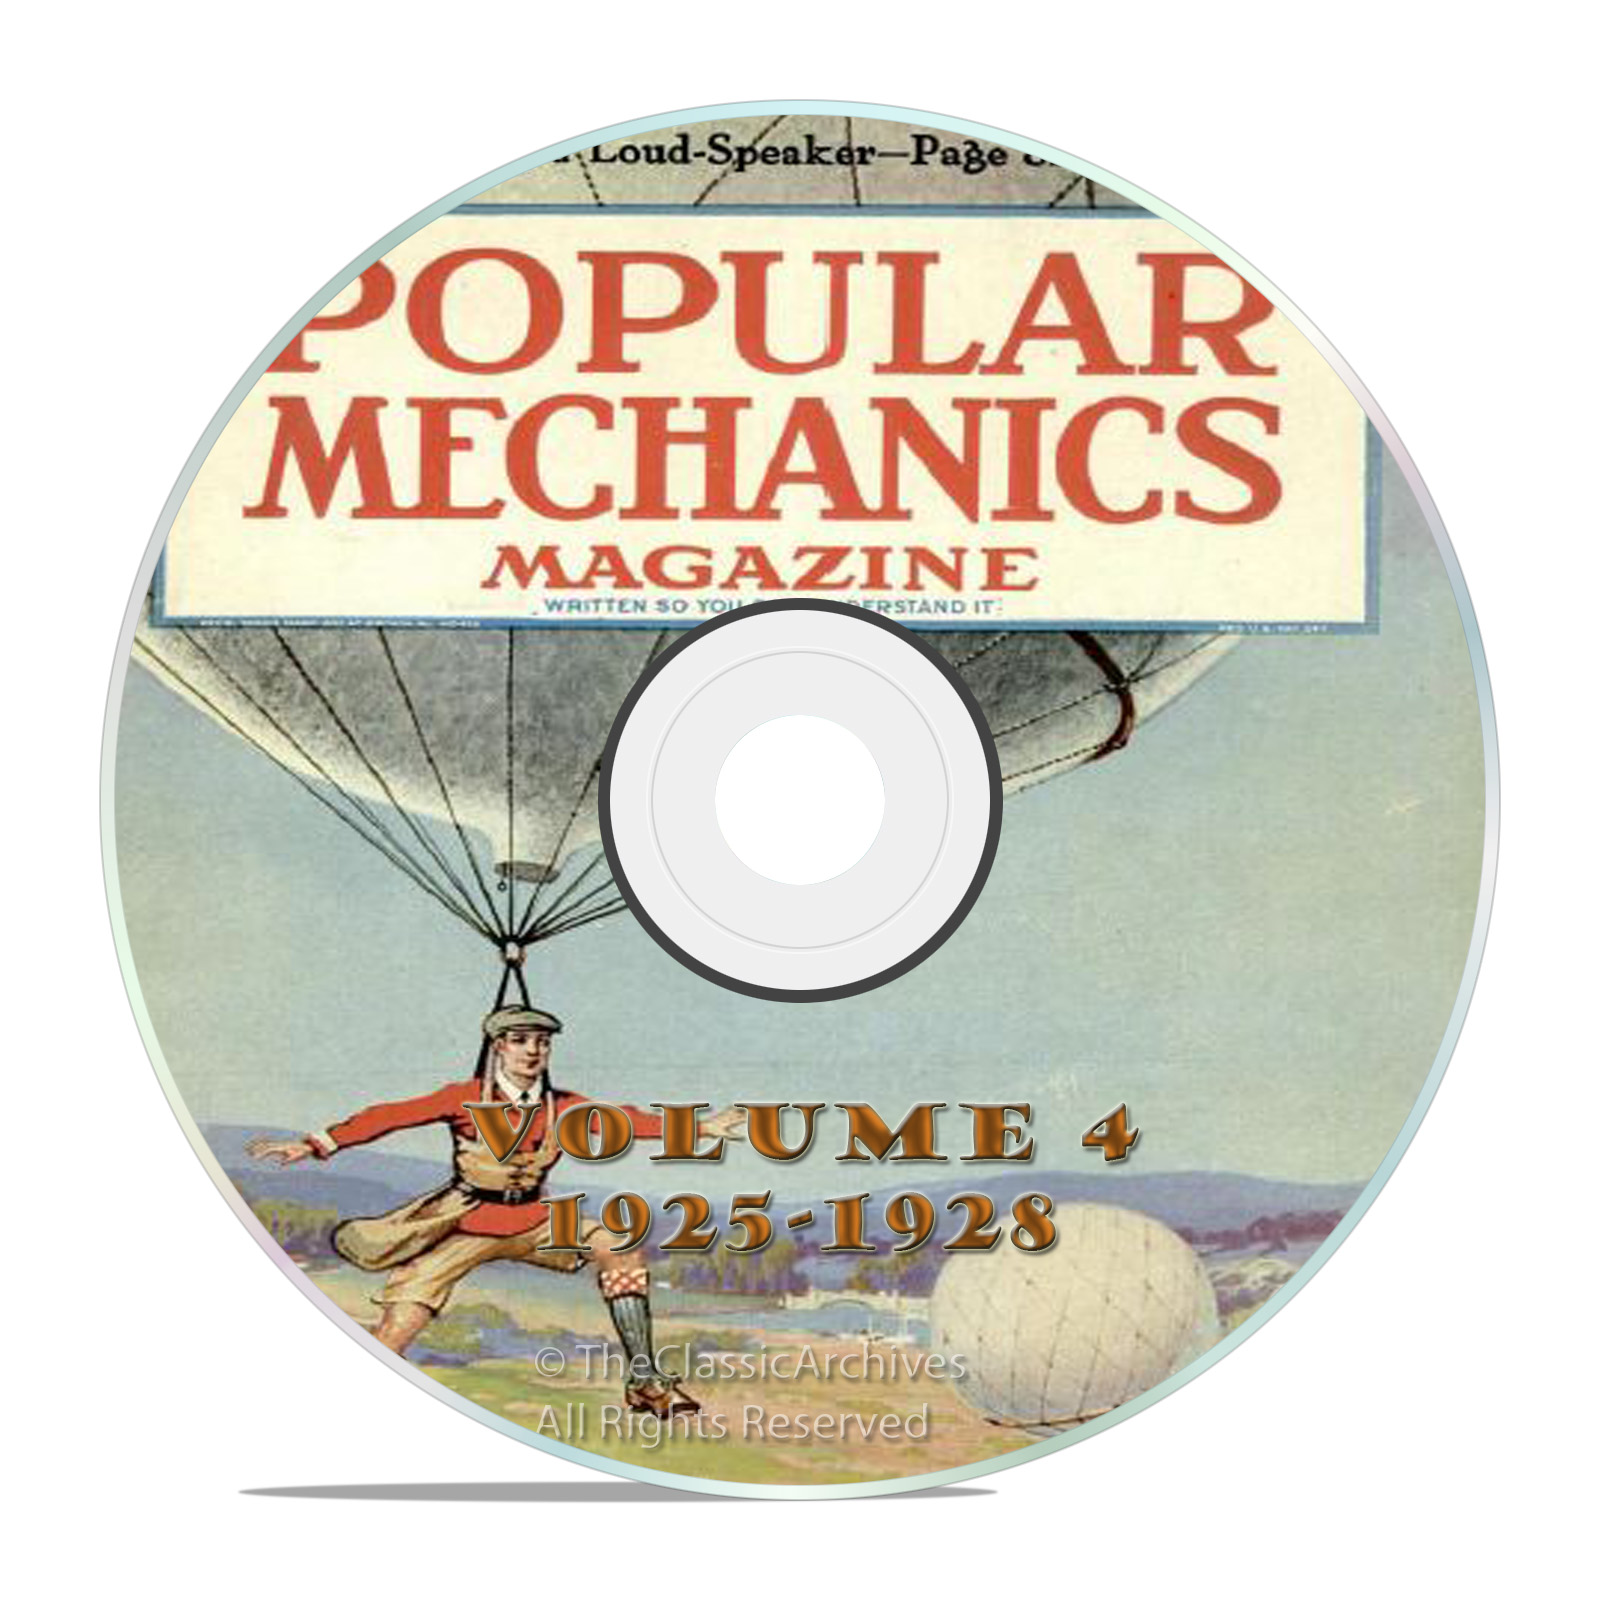 Vintage Popular Mechanics Magazine, Volume 4 DVD, 1925-1928, 46 issues